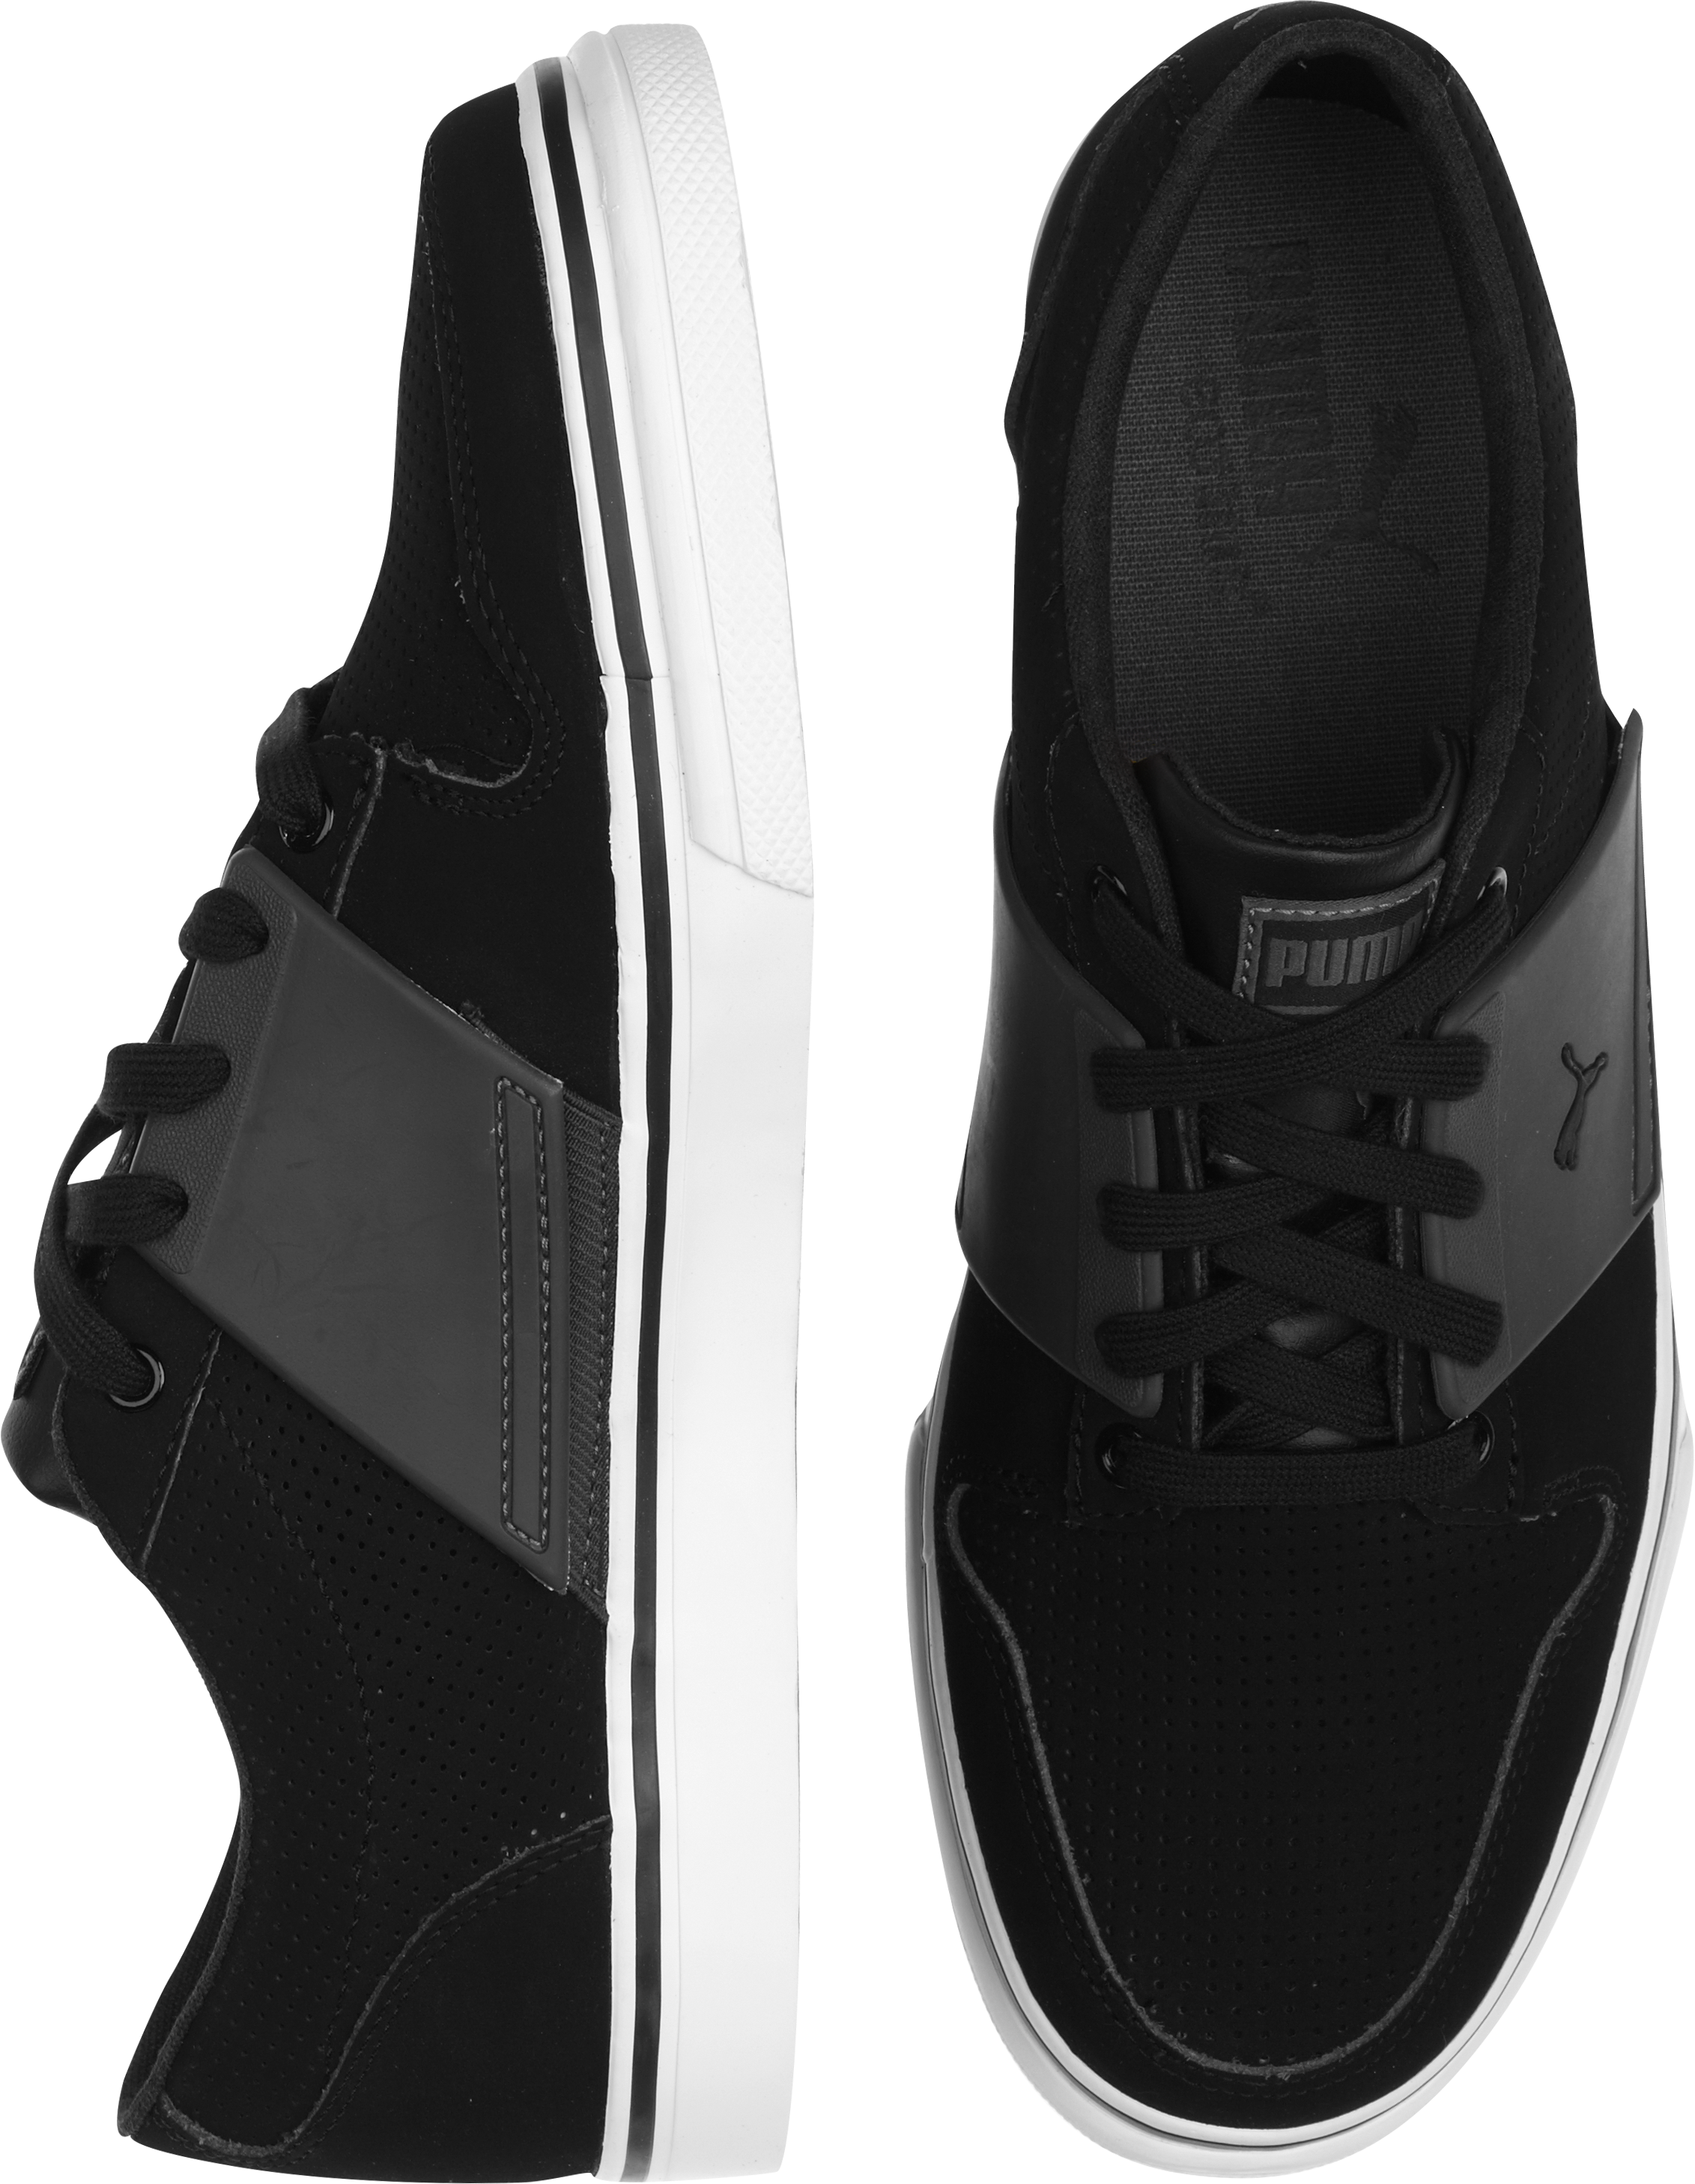 Puma El Ace Black and Charcoal Sneakers 